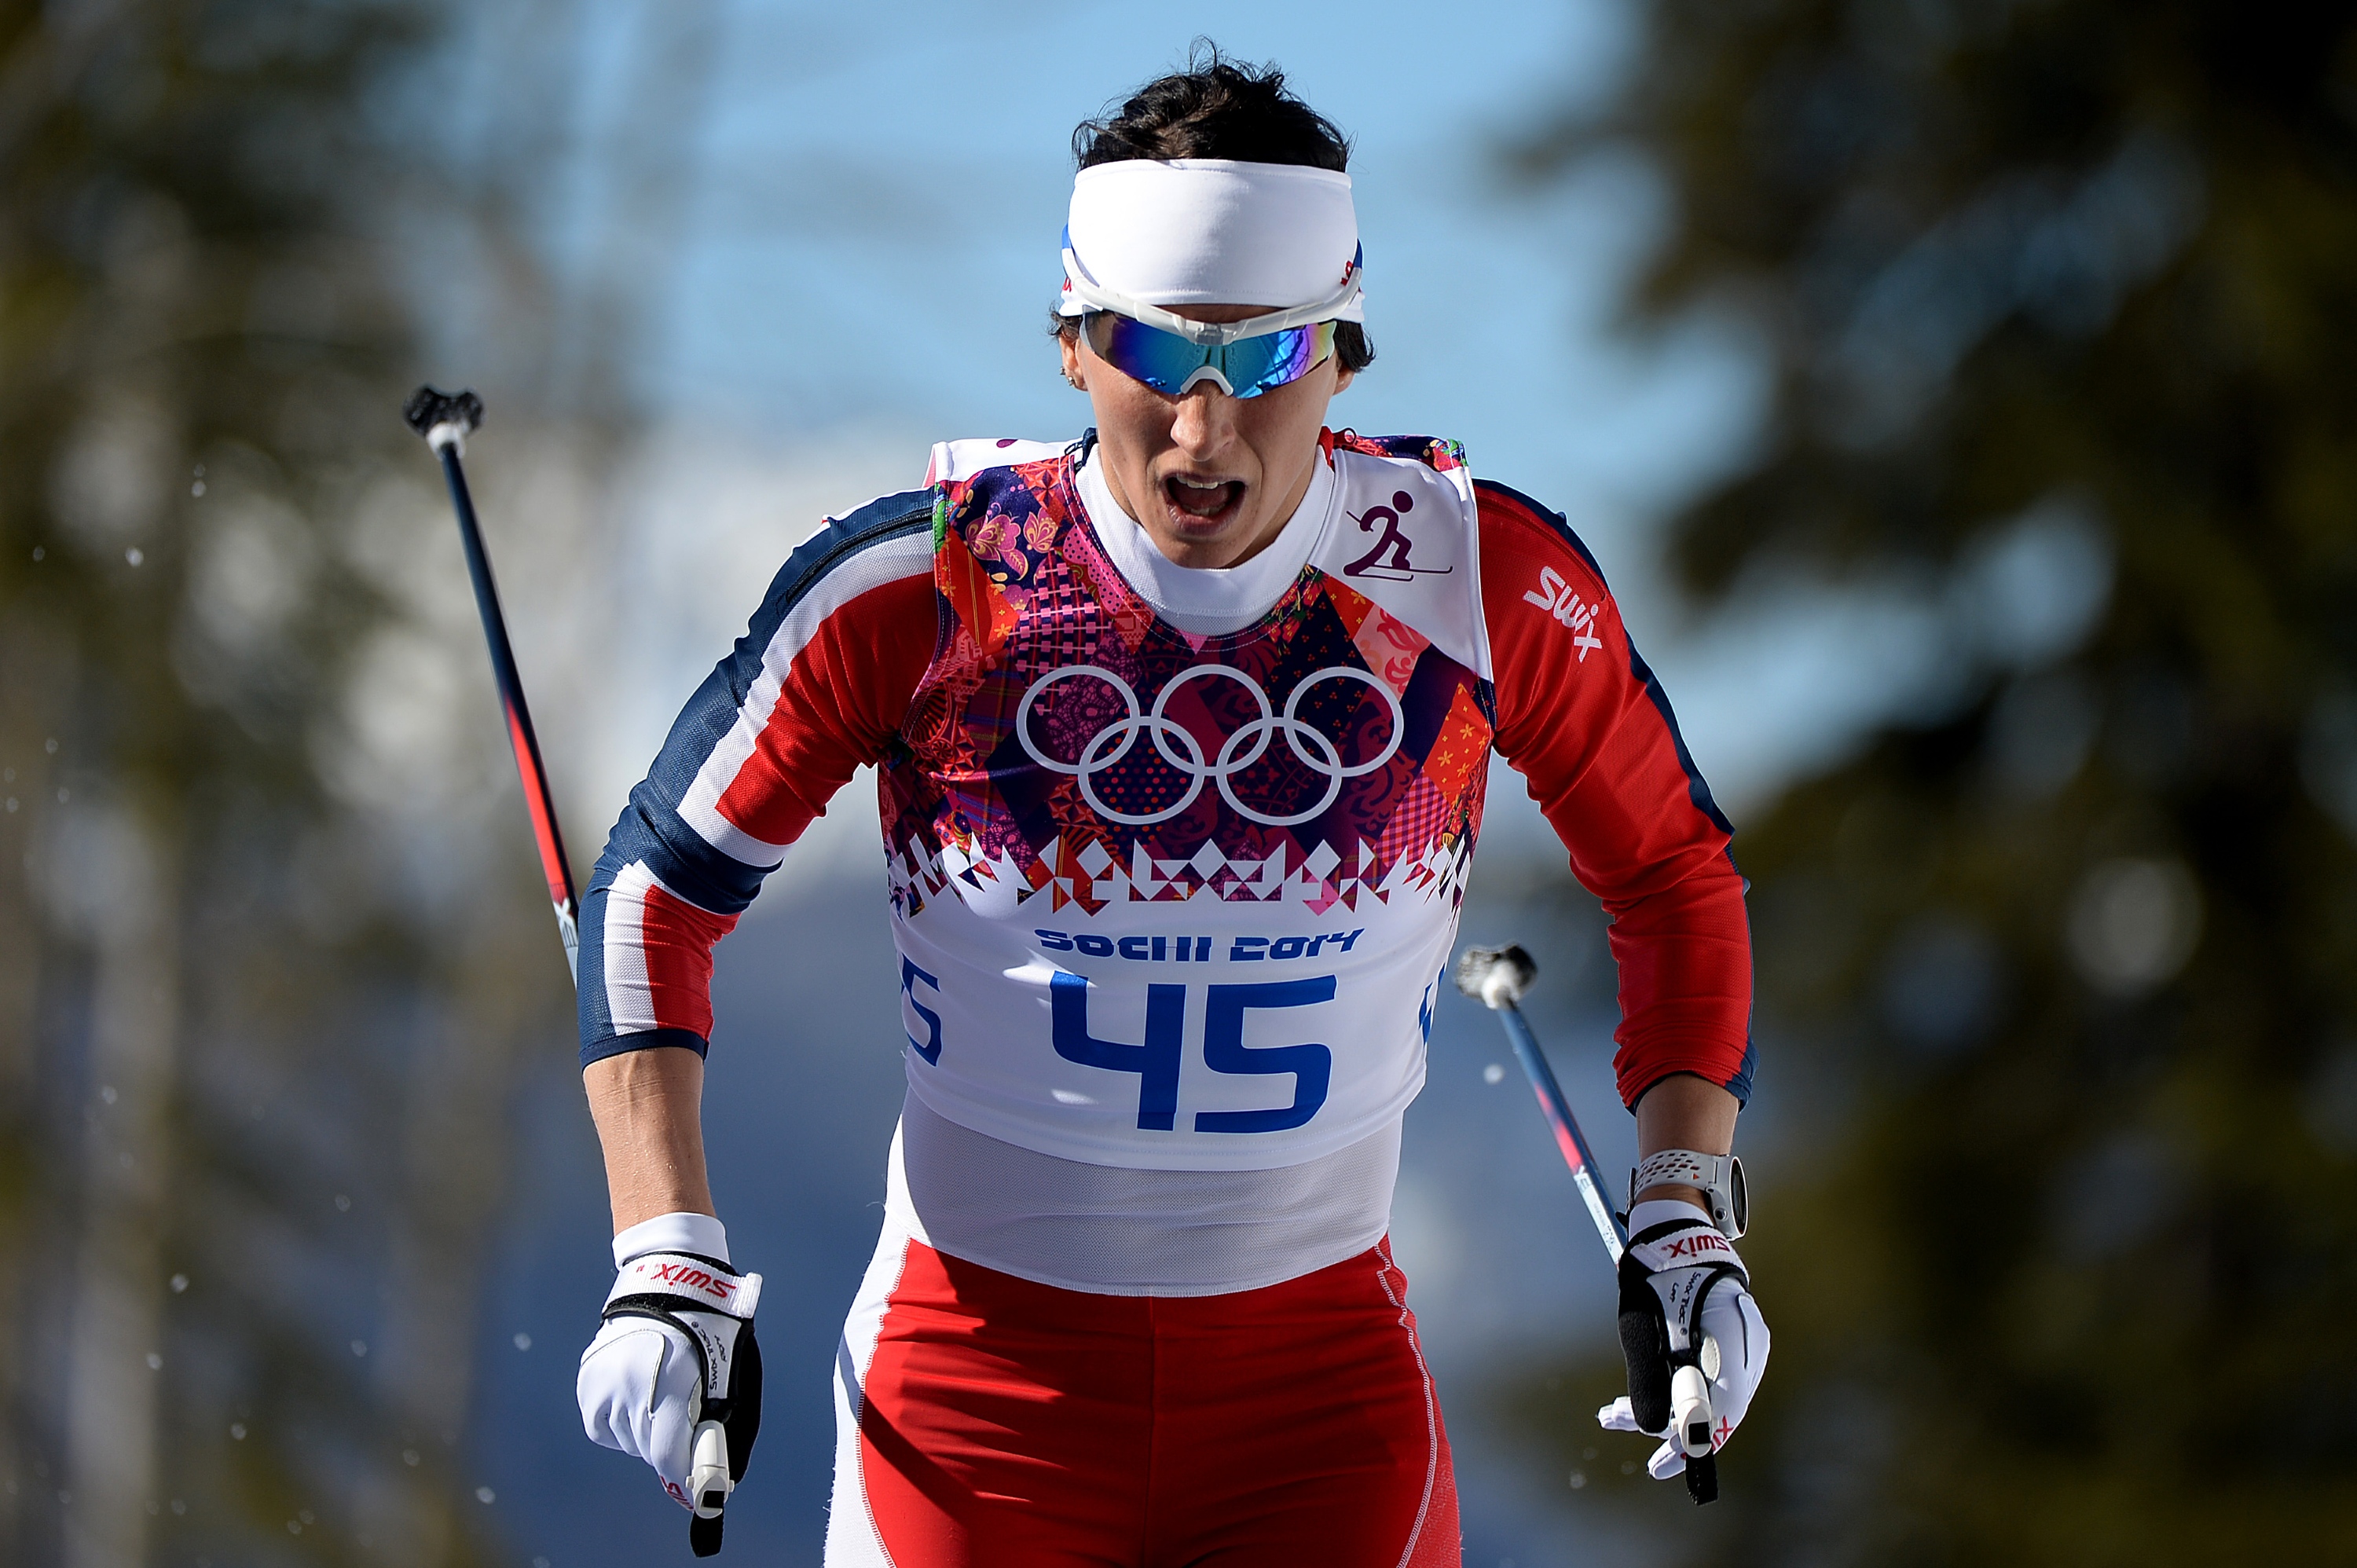 cross-country-skiing-winter-olympics-20140213-124520-859.jpg